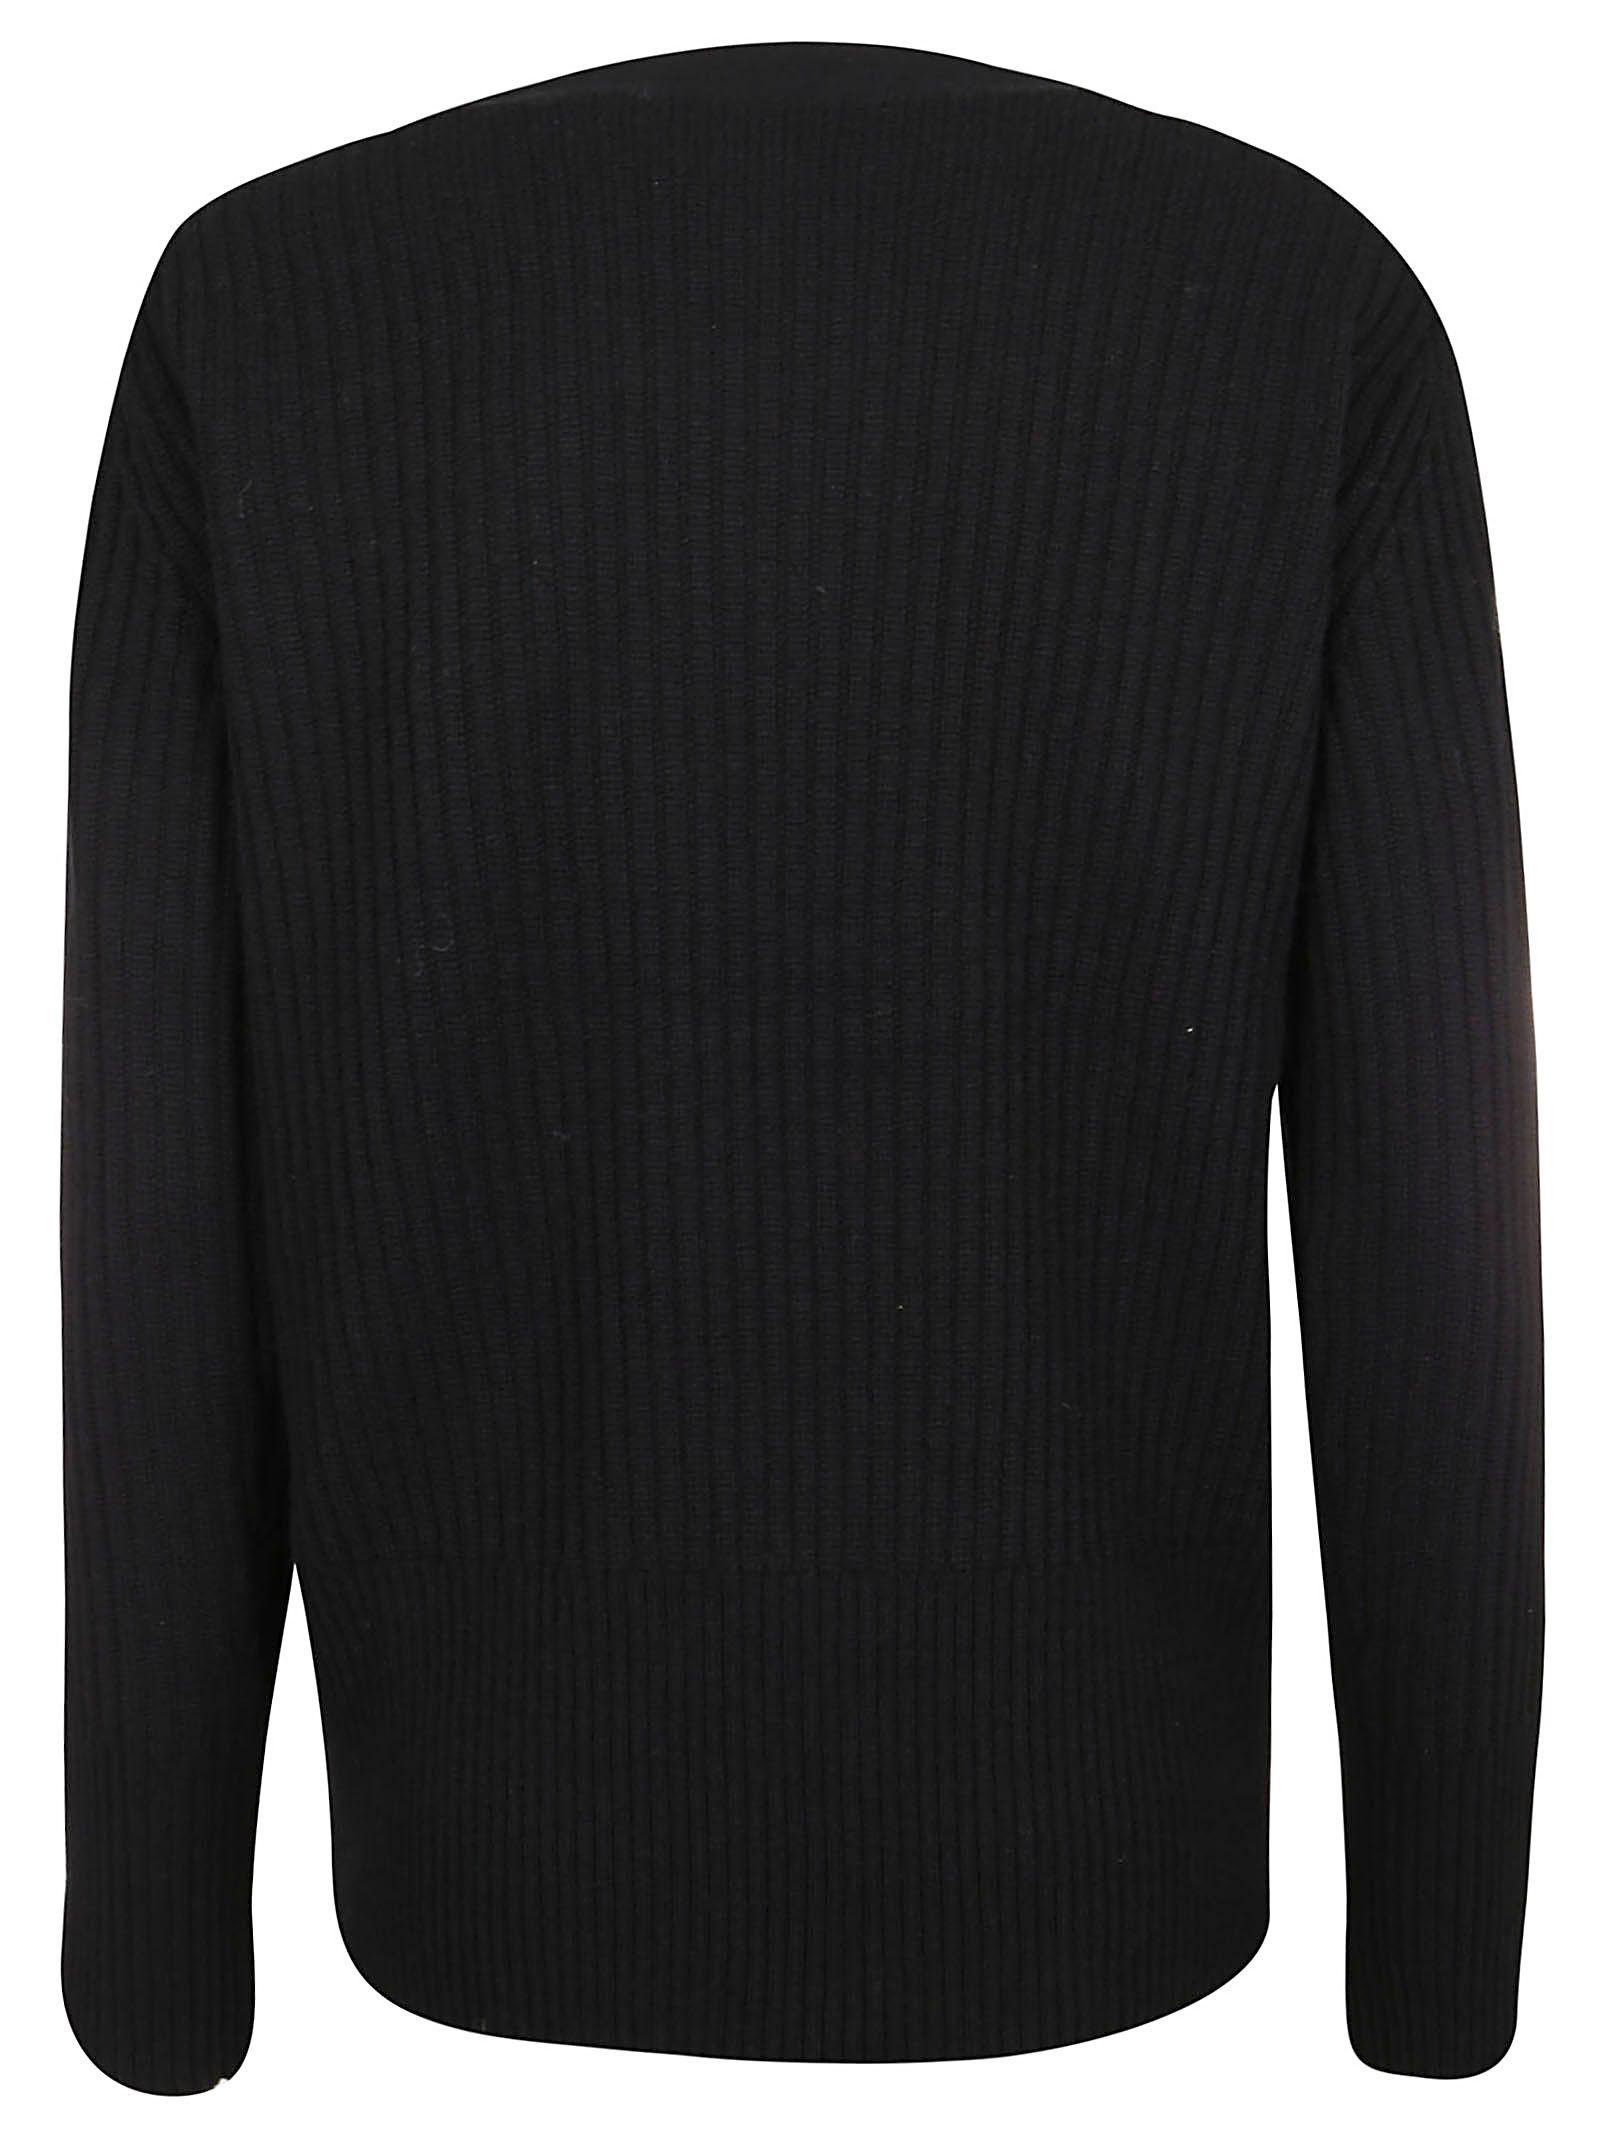 Calvin Klein Wool Sweater in Black - Lyst